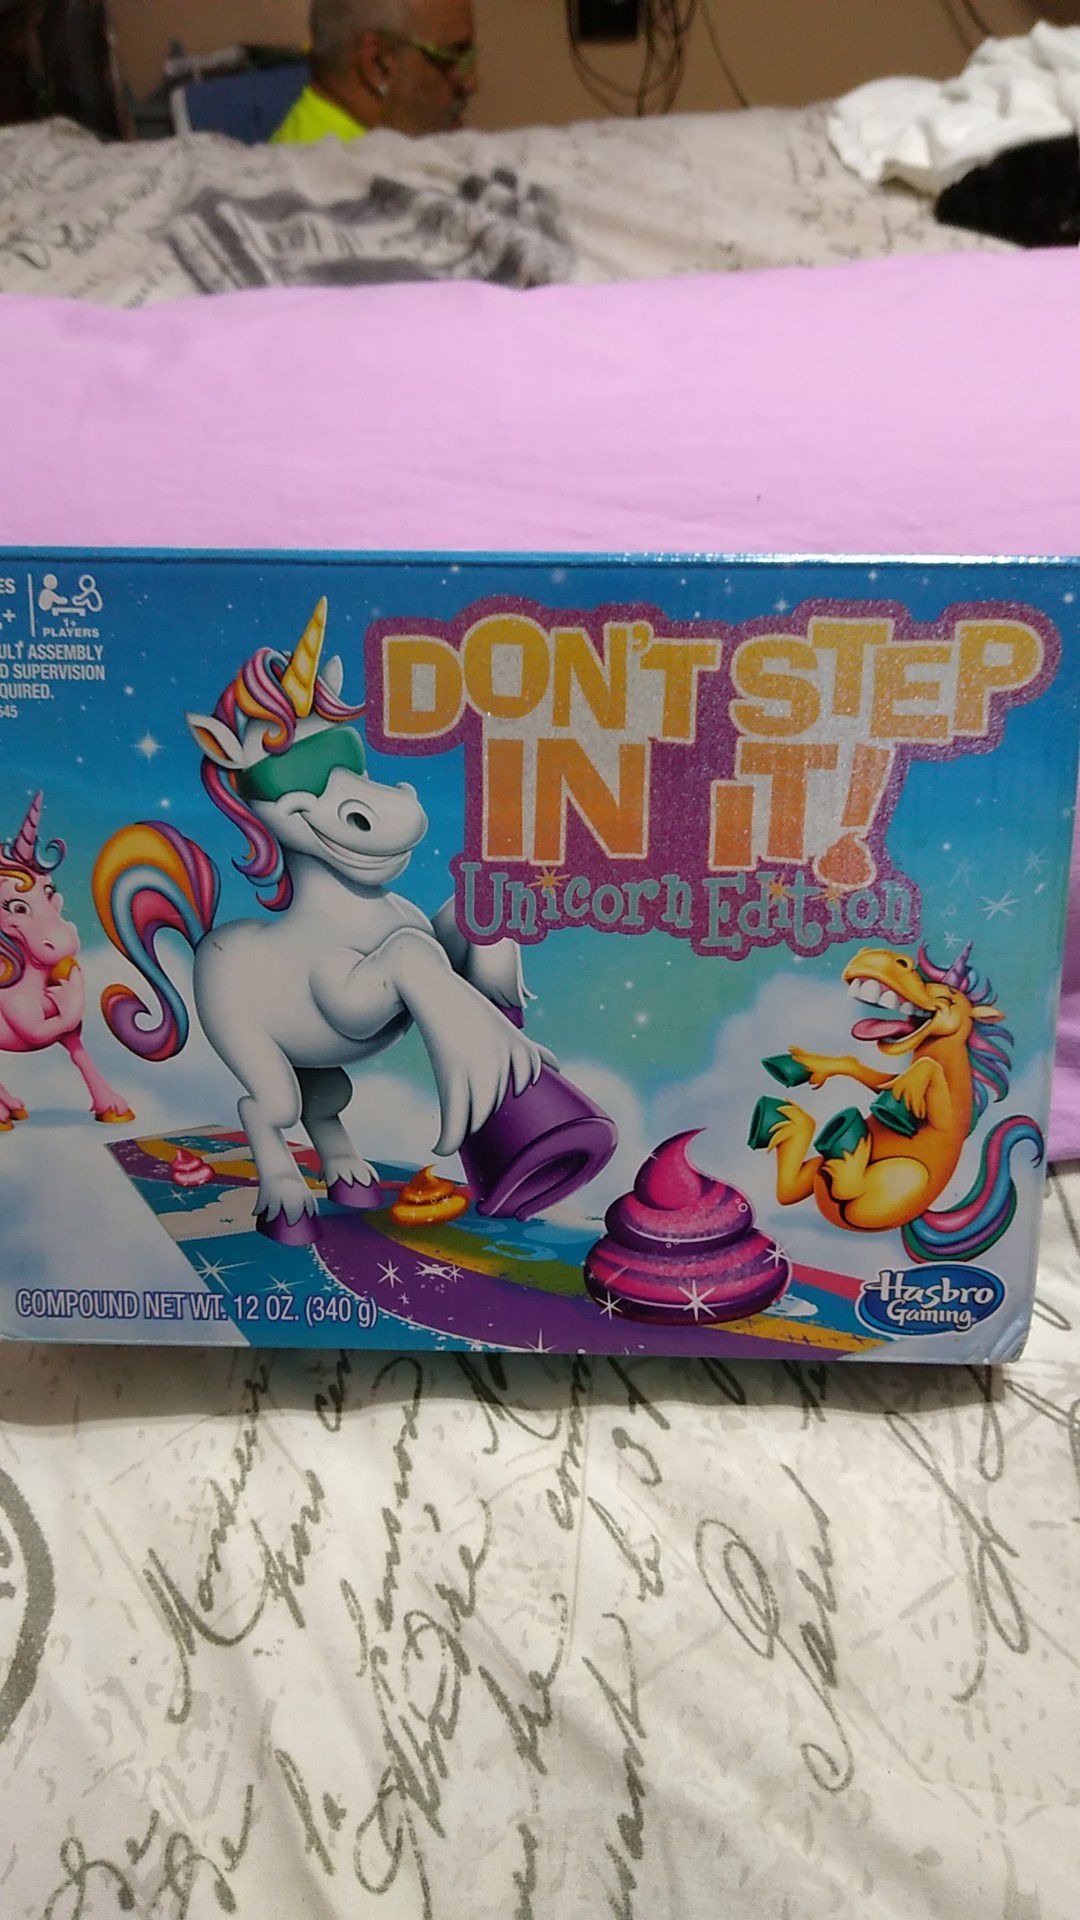 Hasbro Unicorn Edition Don't Step In It